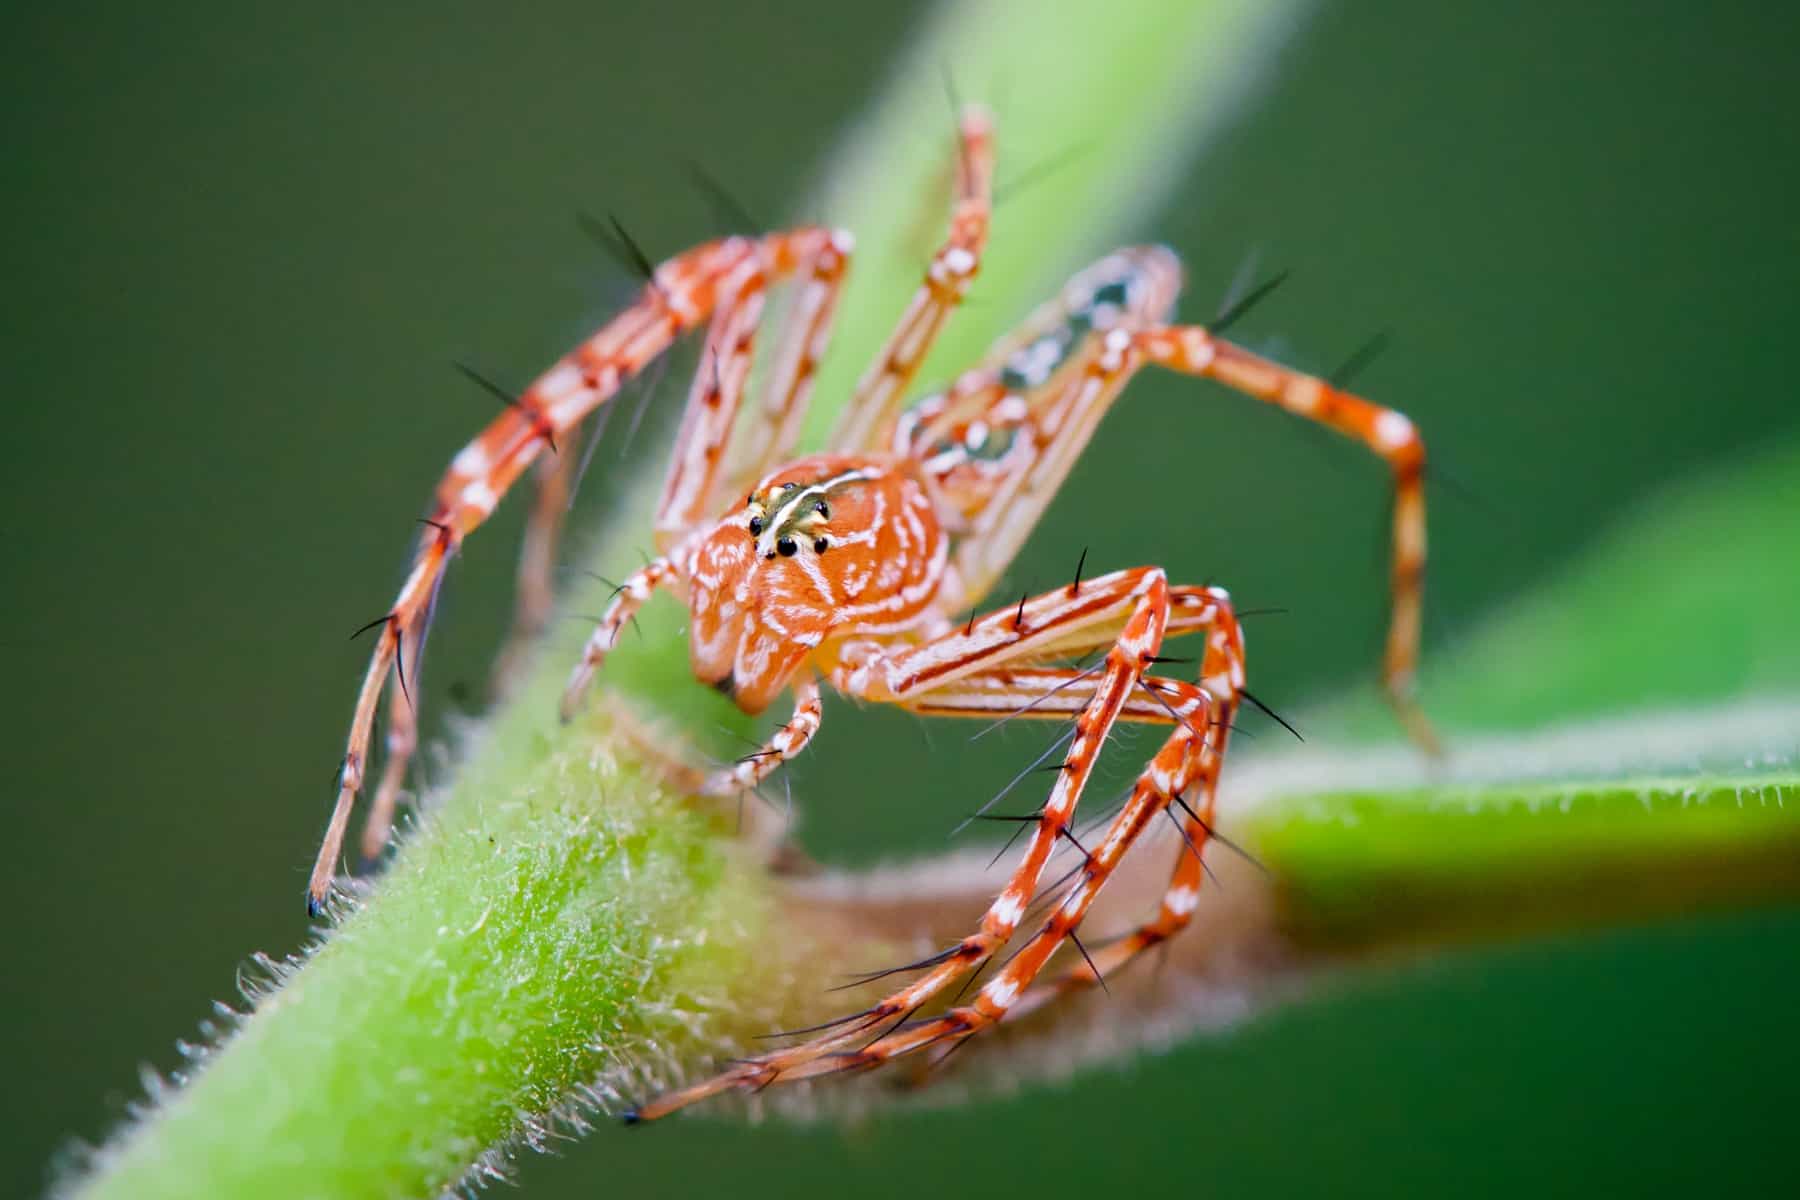 Lynx spider on plant orange